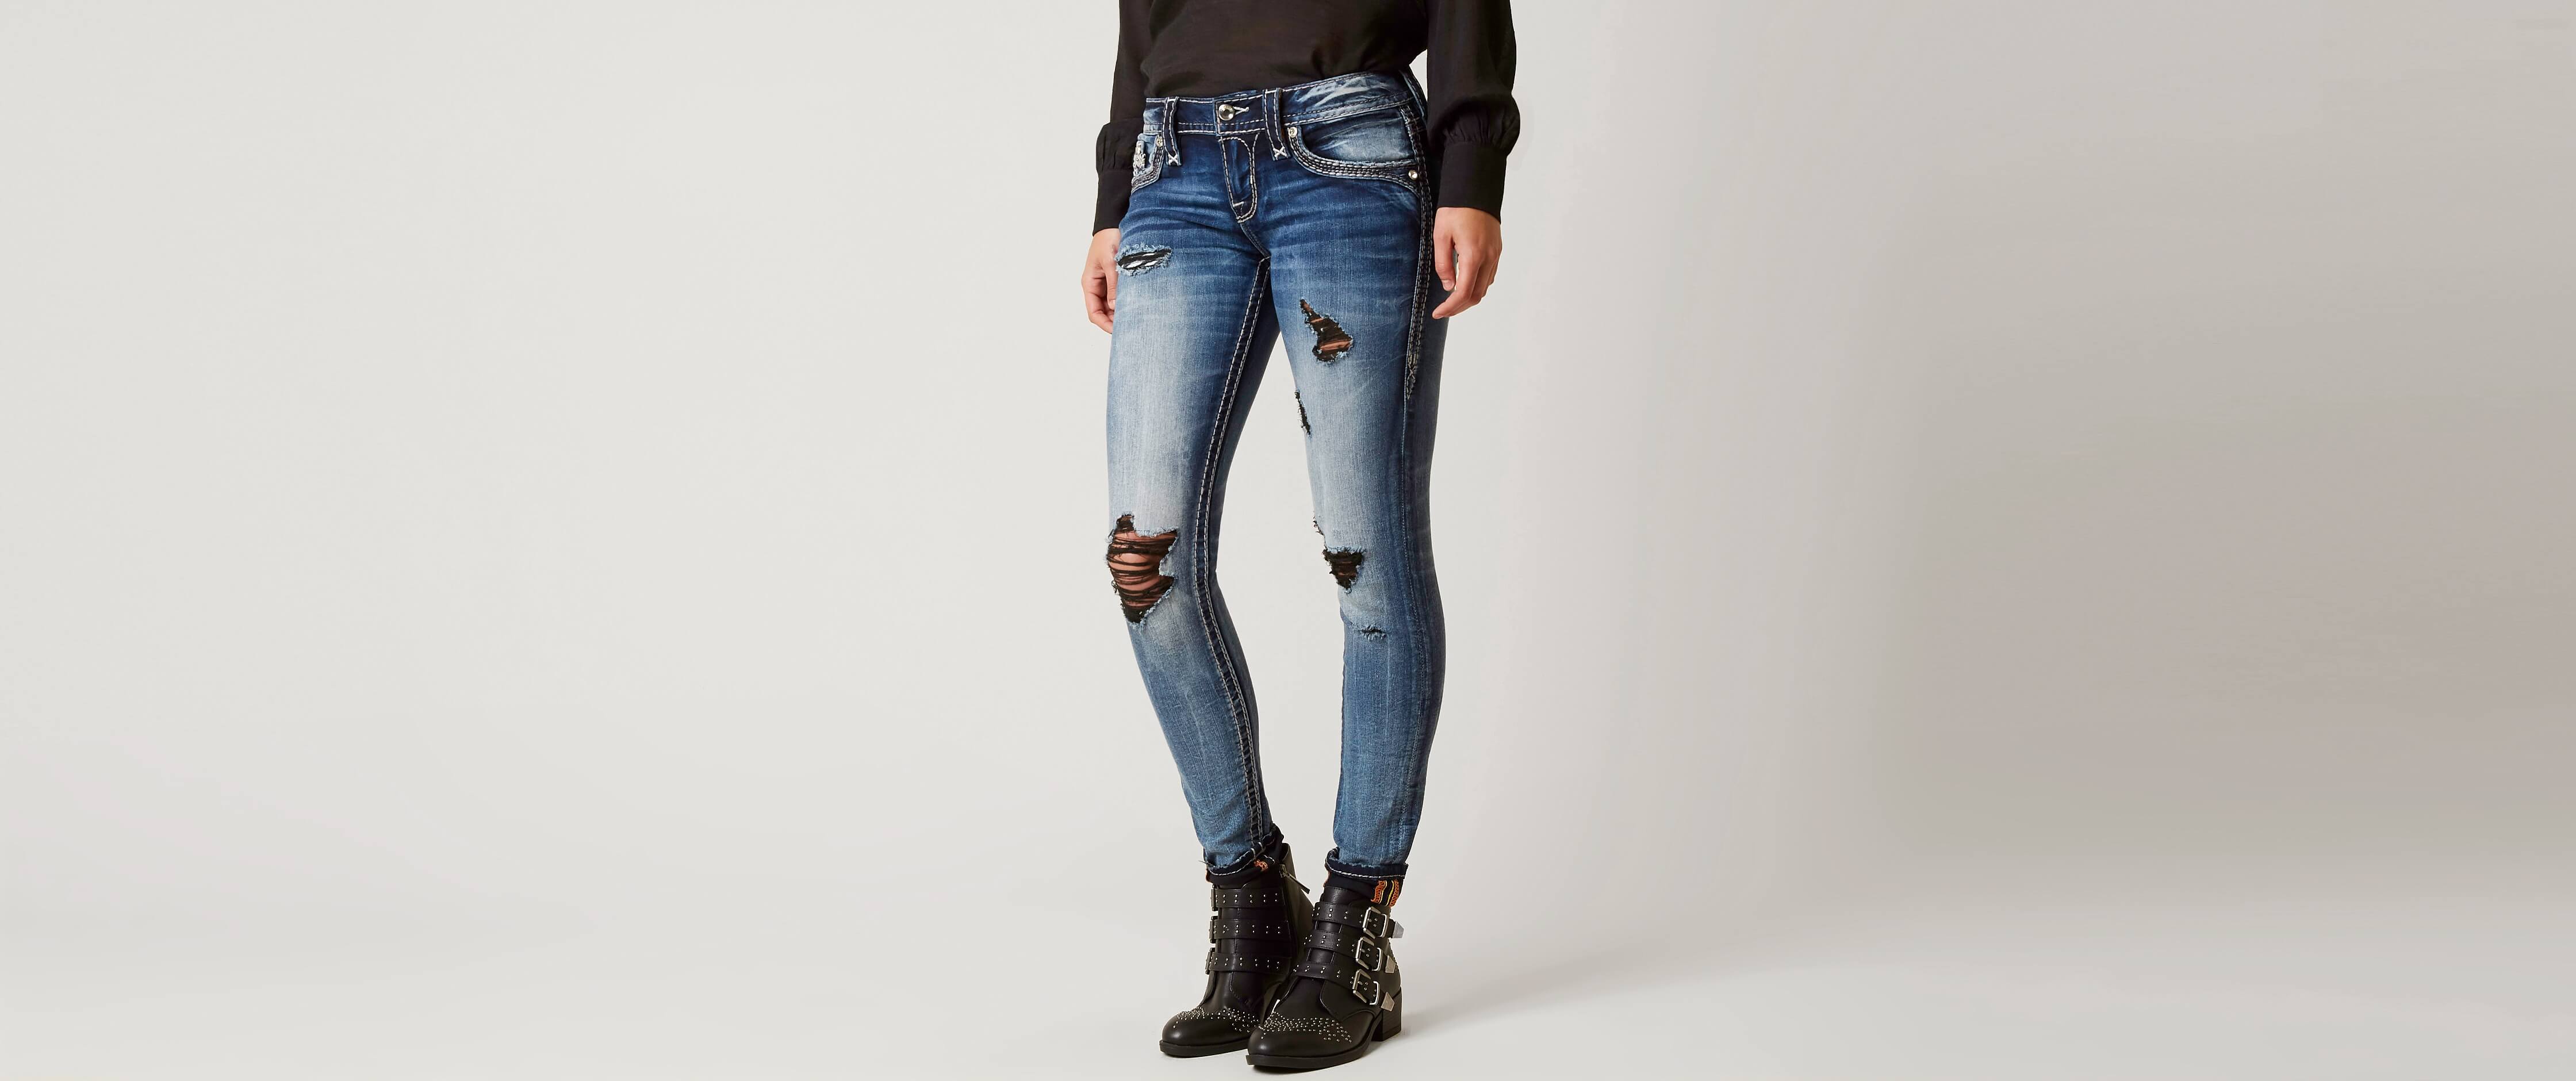 rock revival womens skinny jeans